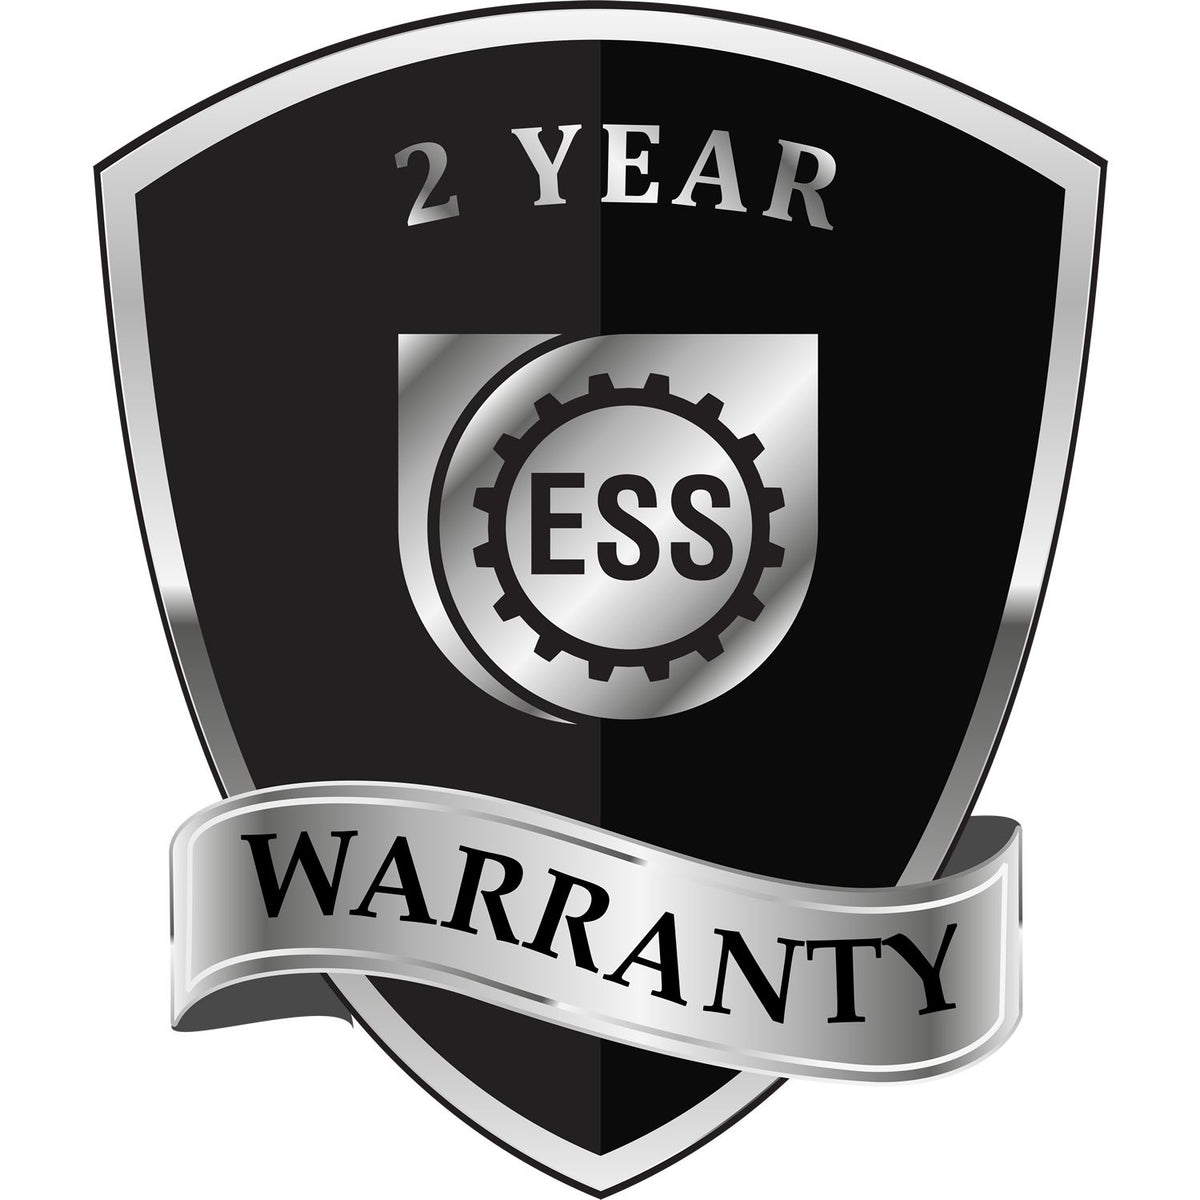 A black and silver badge or emblem showing warranty information for the Mississippi Geologist Desk Seal